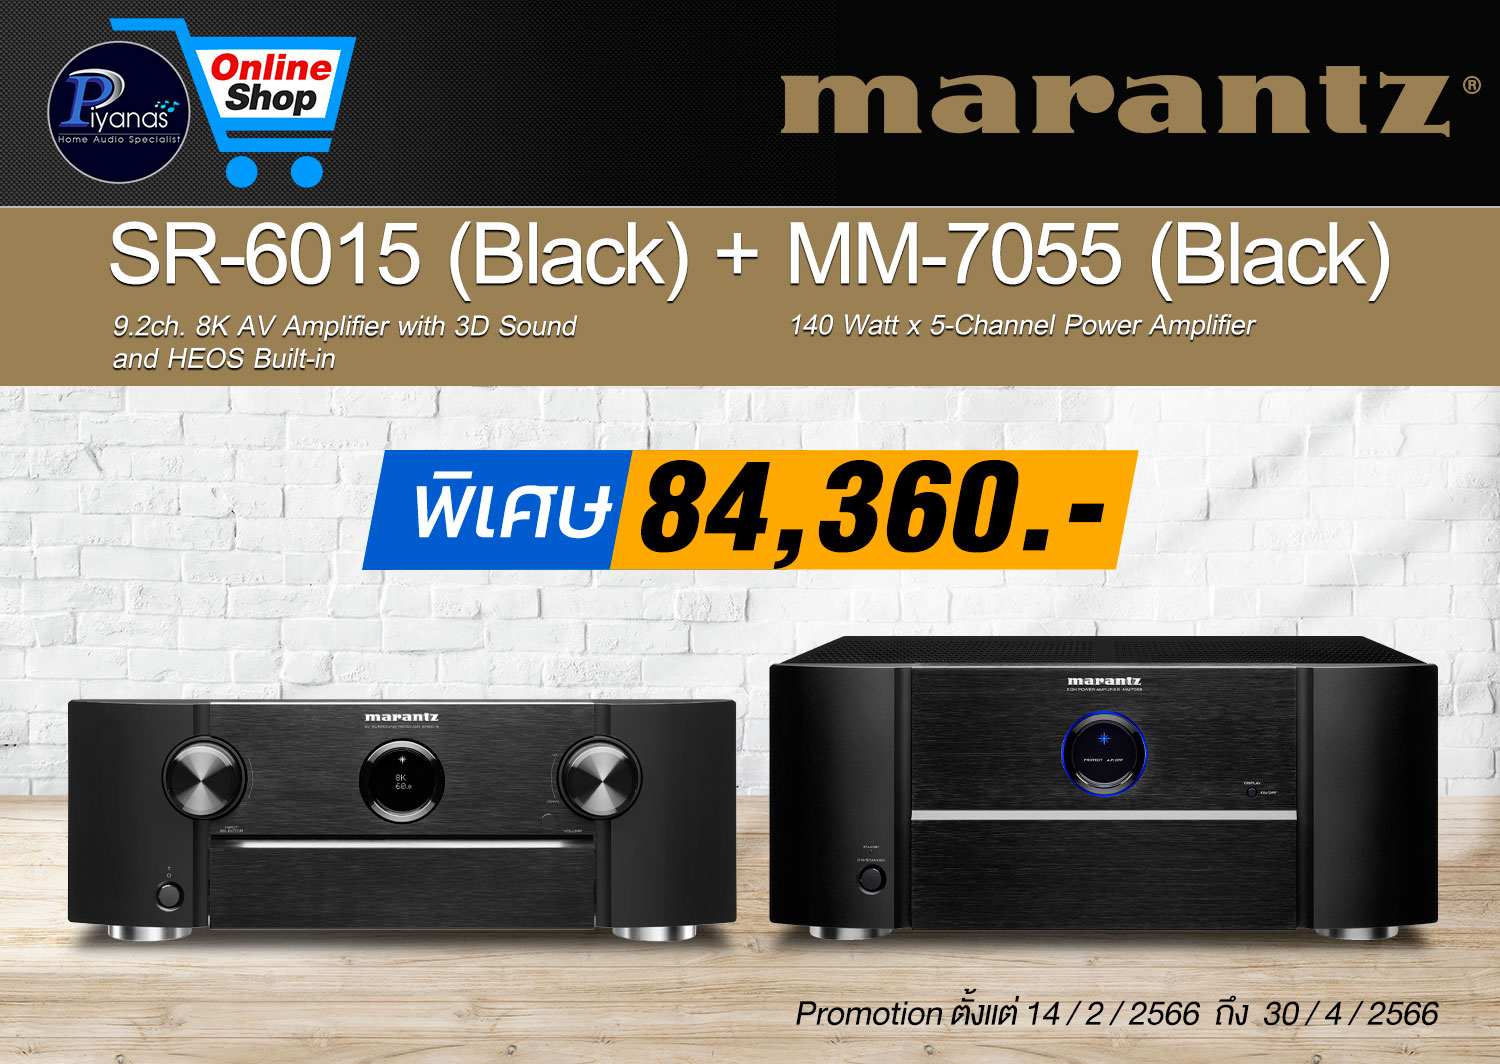 SR-6015 (Black) + MM-7055 (Black)